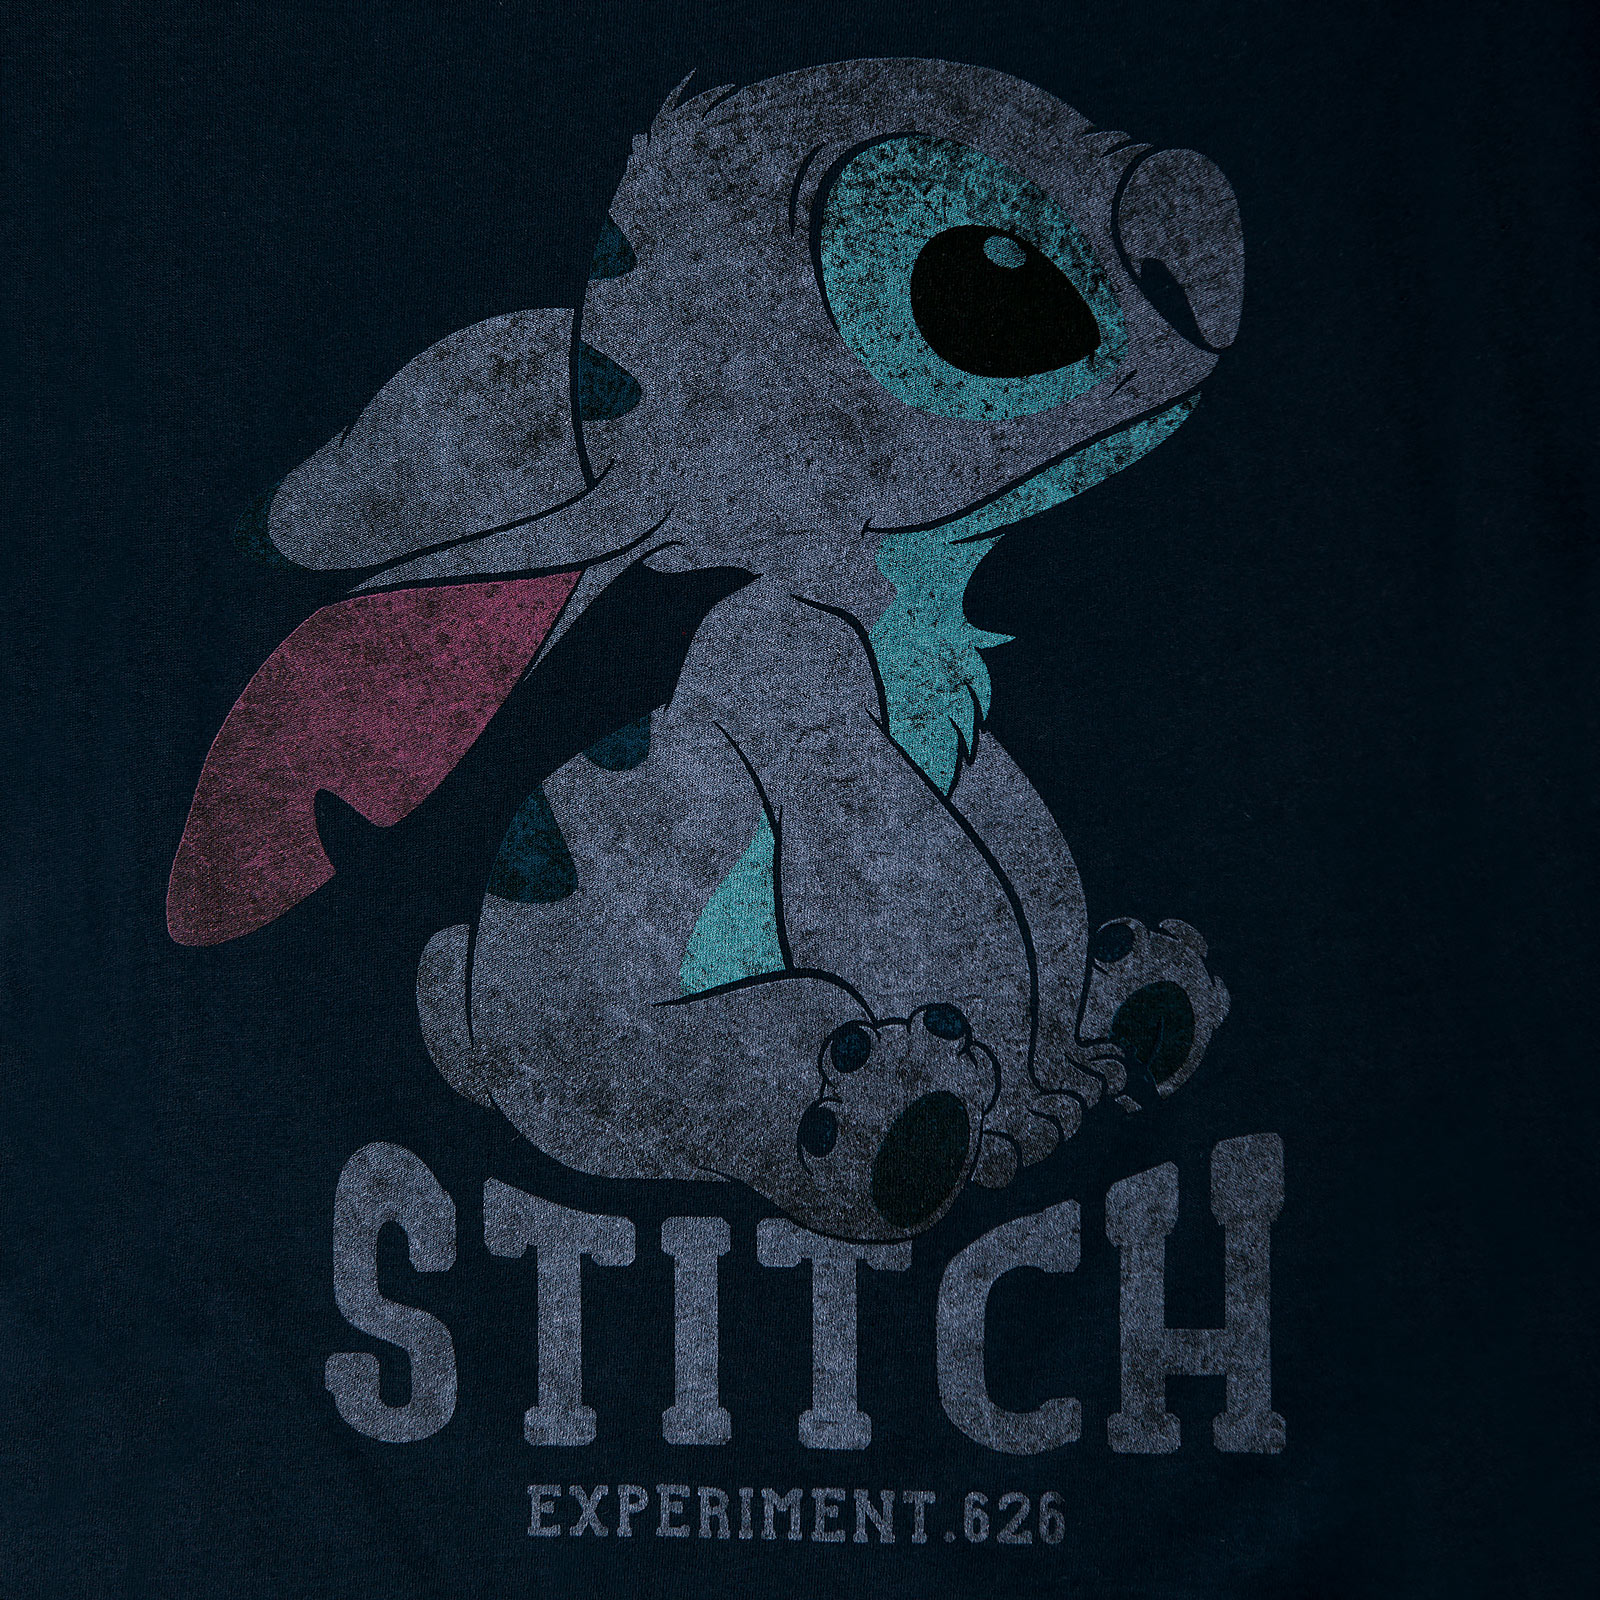 Lilo & Stitch - Stitch T-Shirt Damen blau